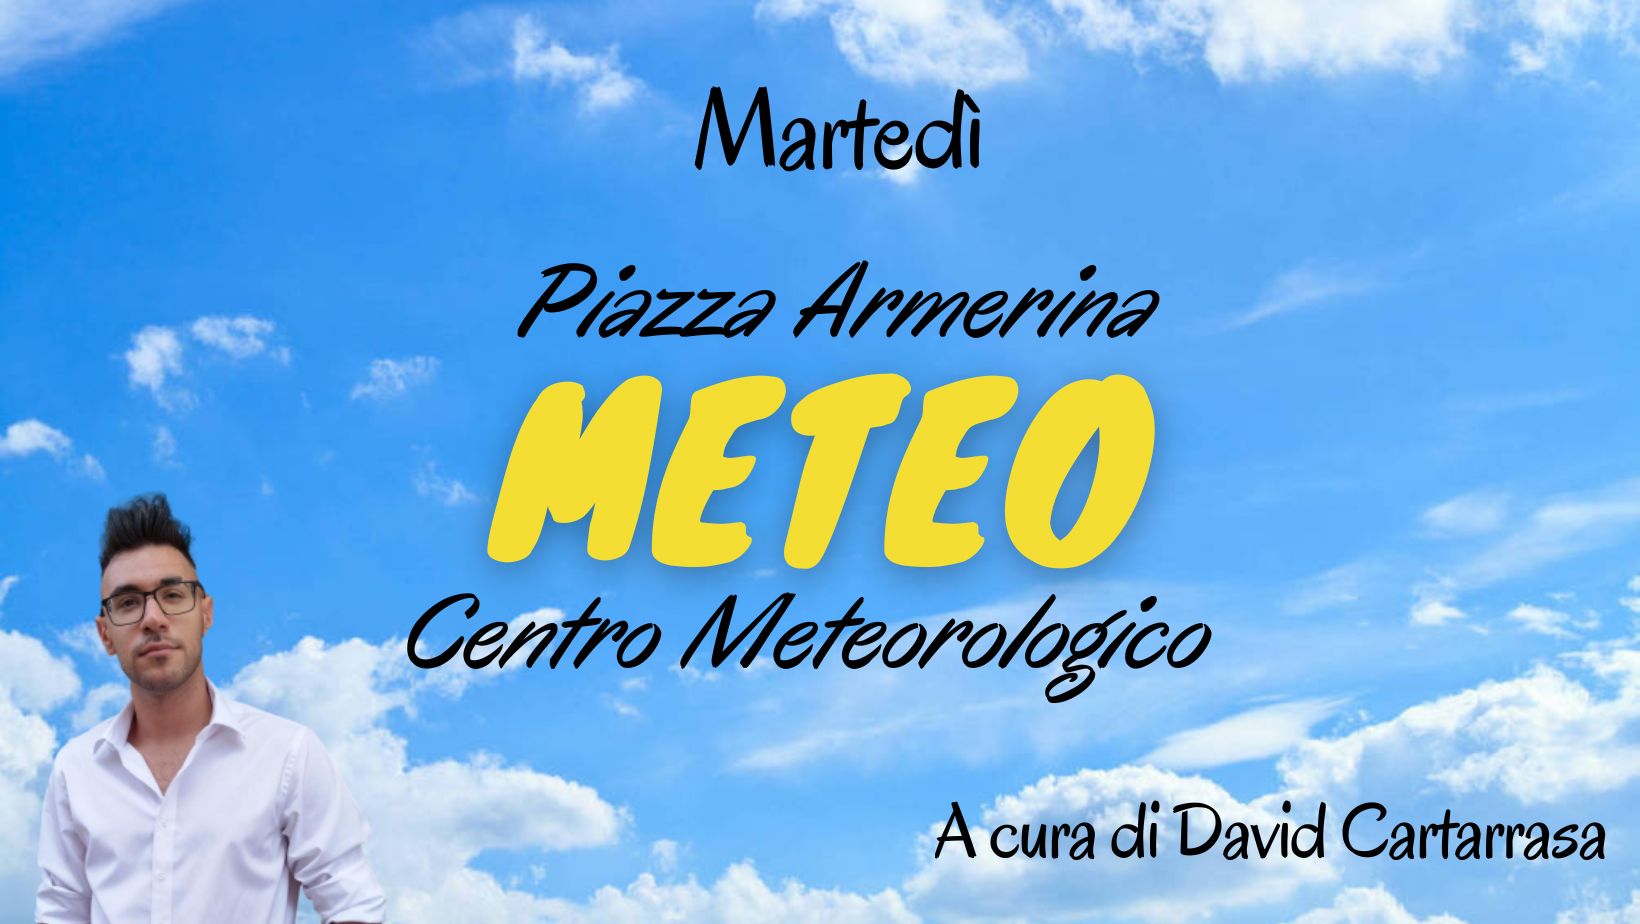 Meteo Piazza Armerina : martedì 14 febbraio